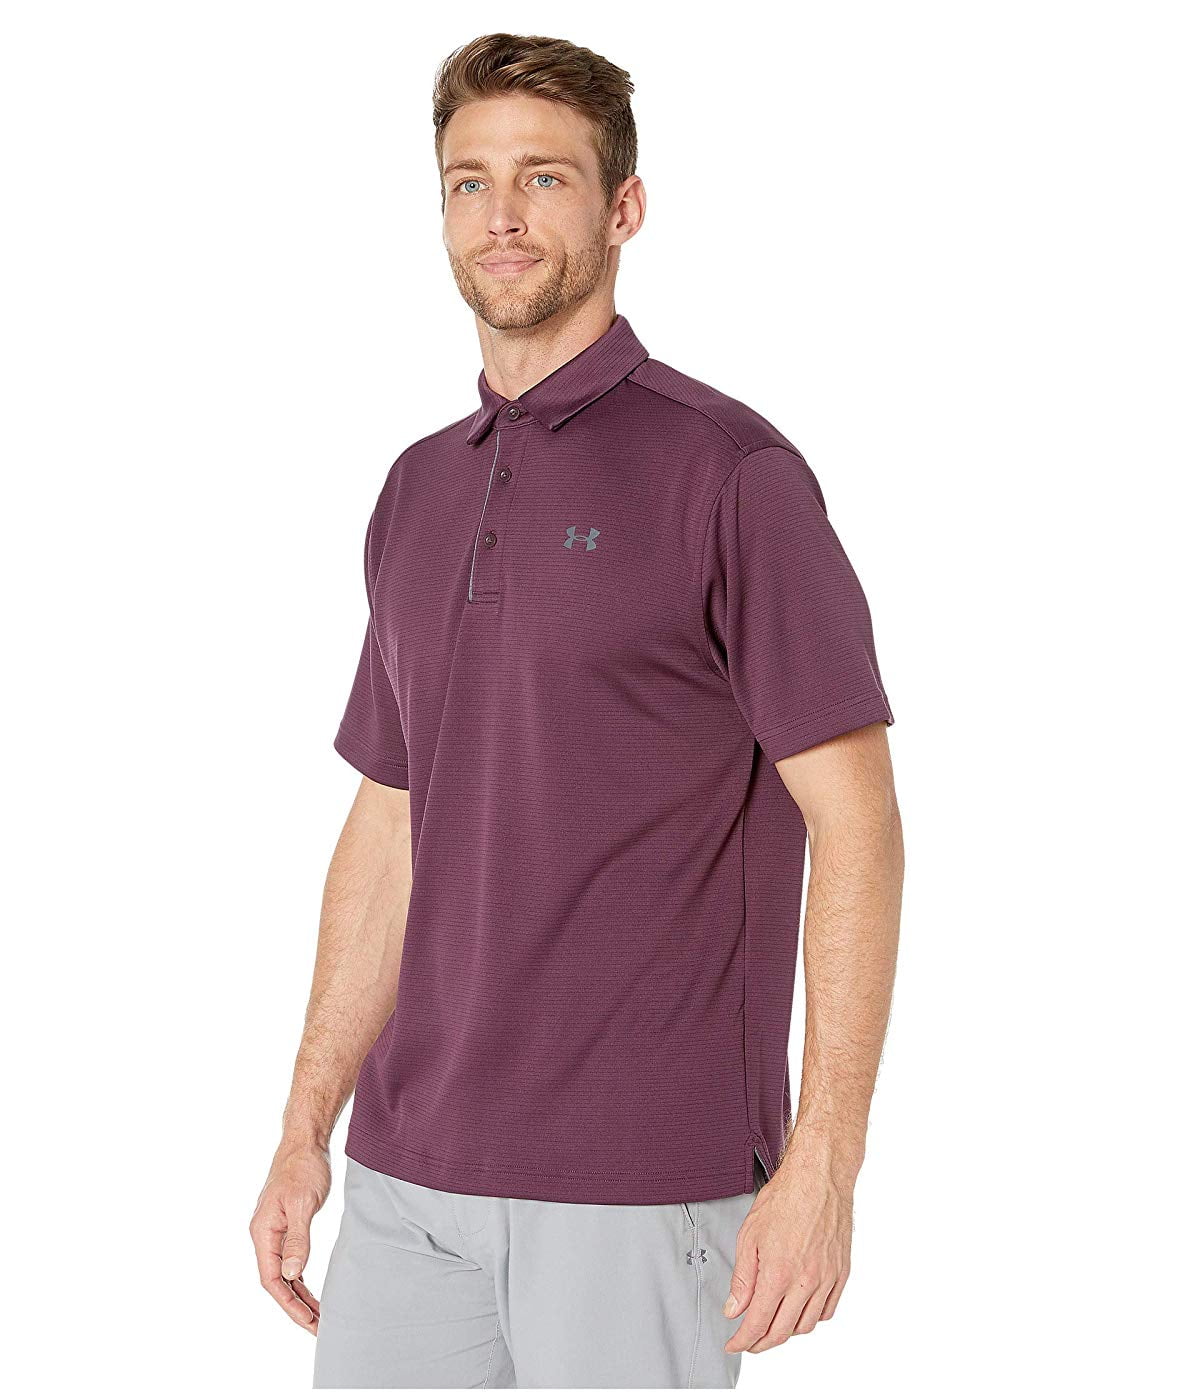 under armour purple polo shirts